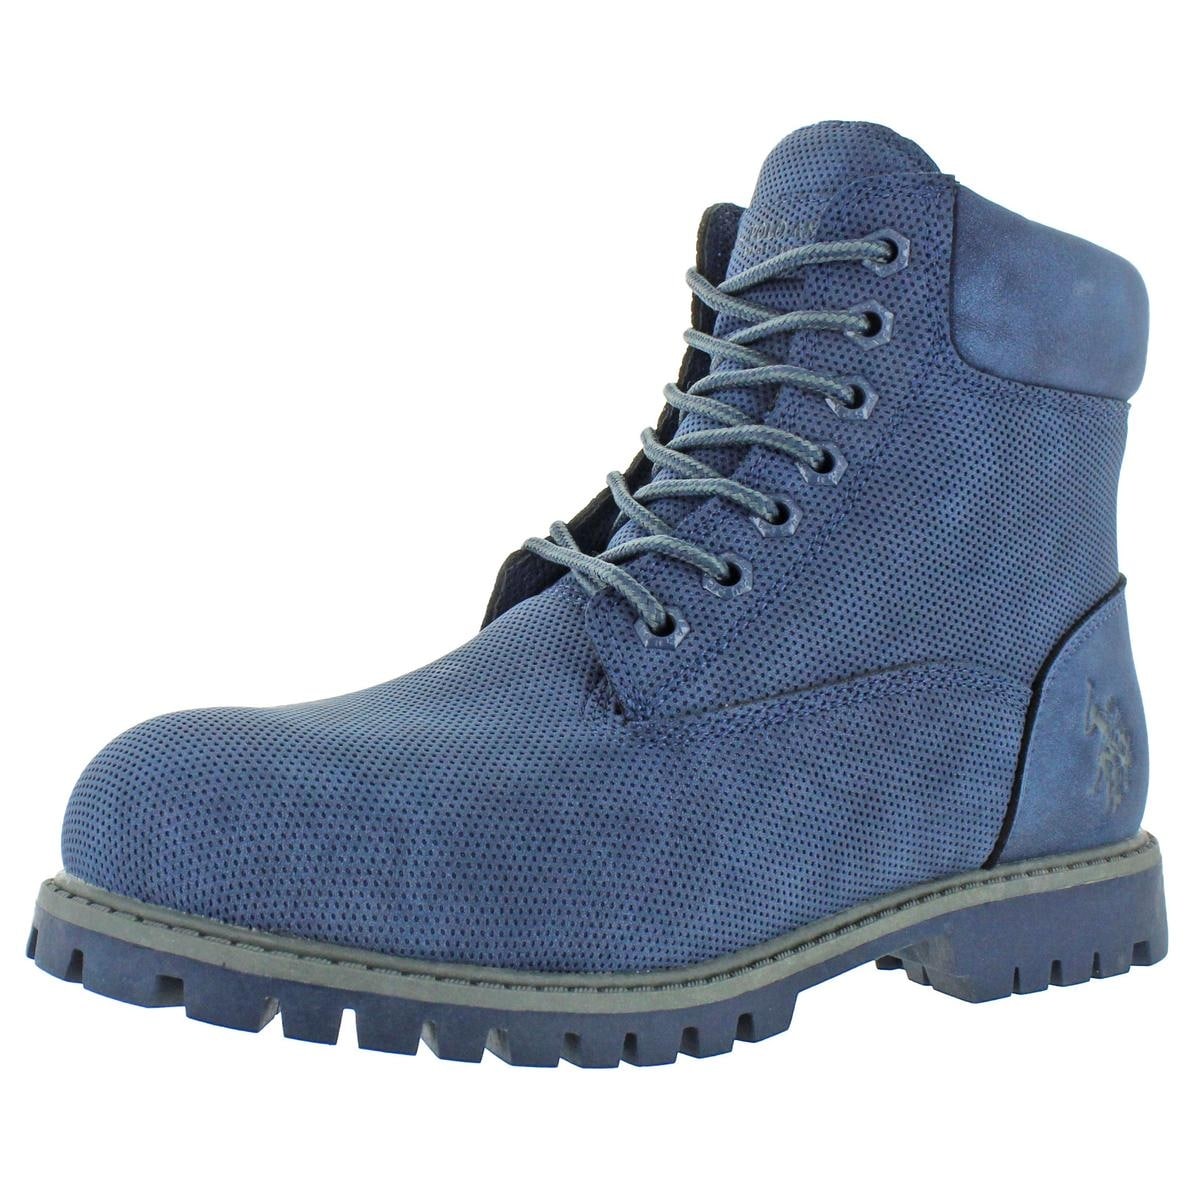 polo blue boots